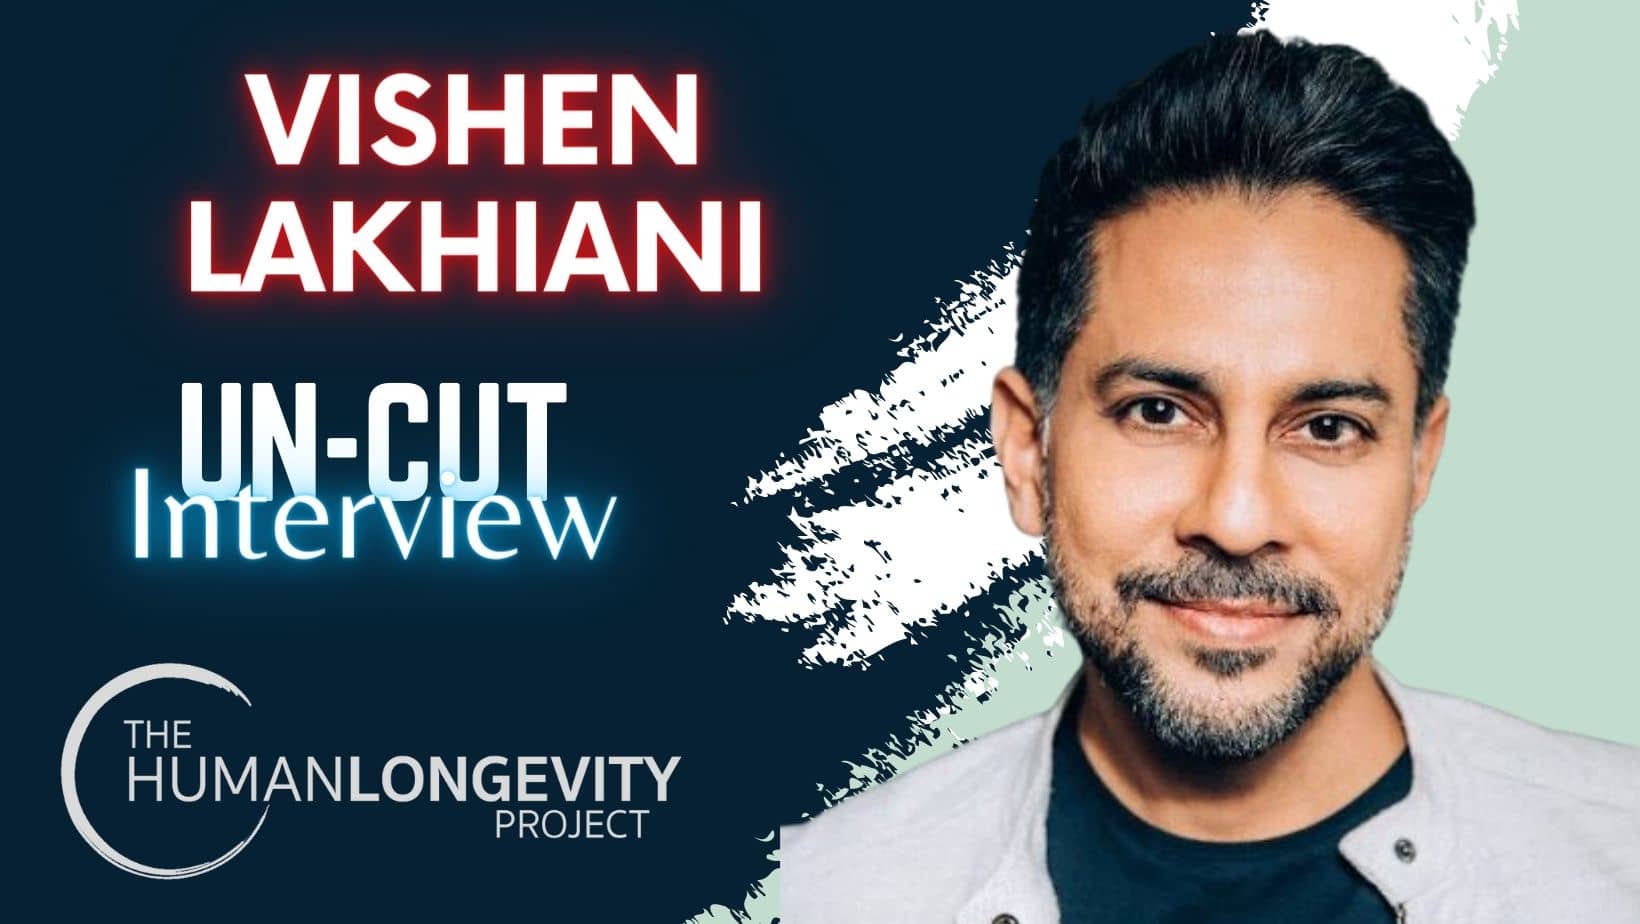 Human Longevity Project Uncut Interview With Vishen Lakhiani